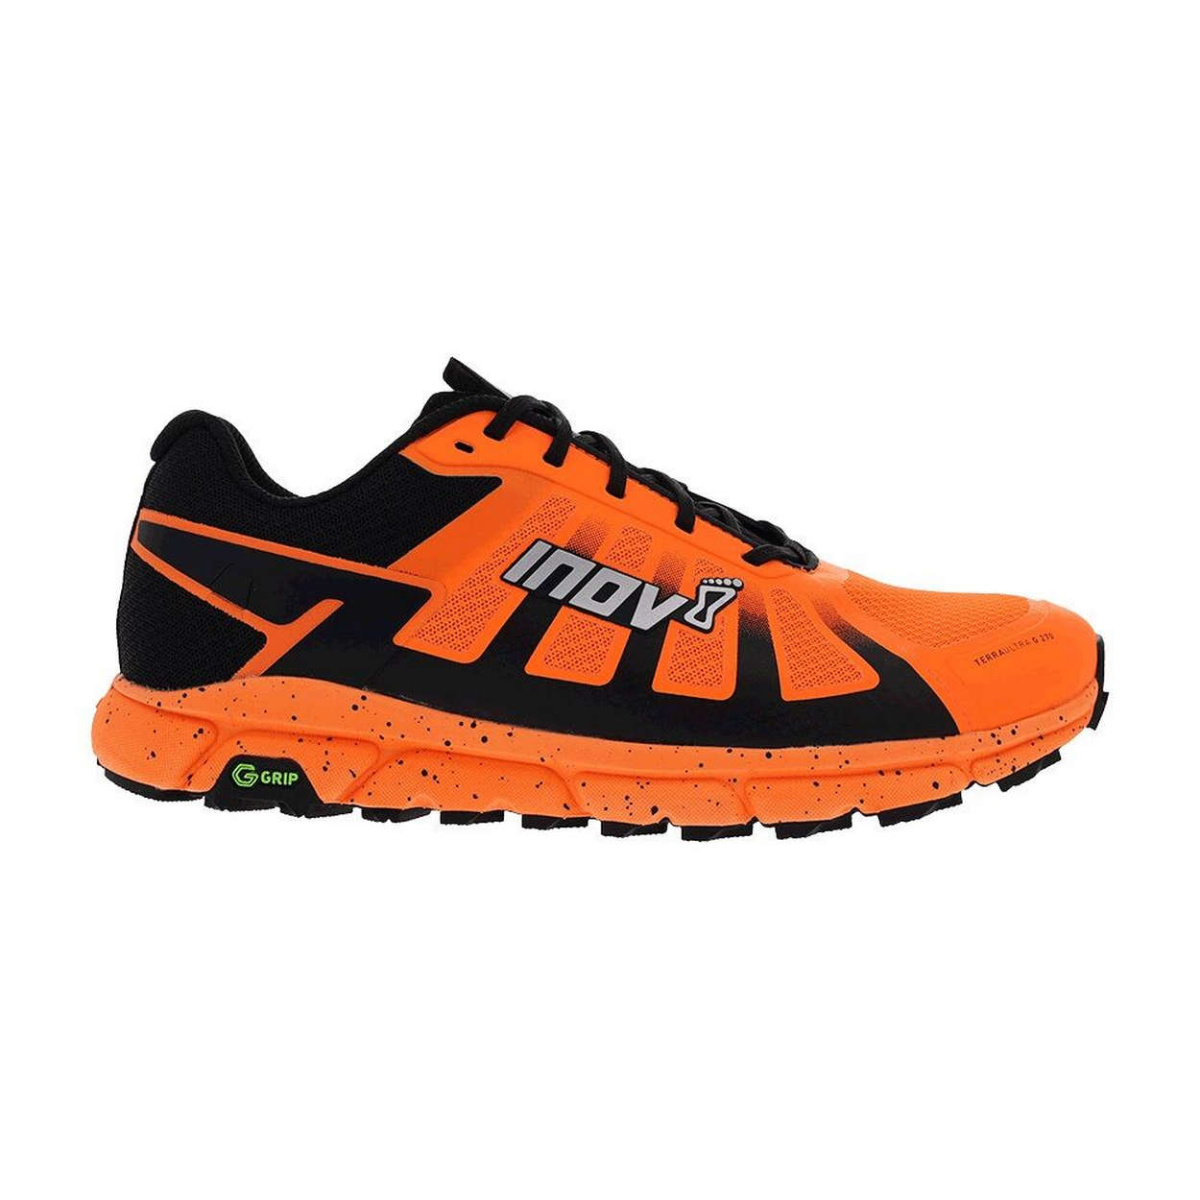 inov 8 Terra Ultra G 270 Orange zero drop trail running shoe Fast and Light CH 001